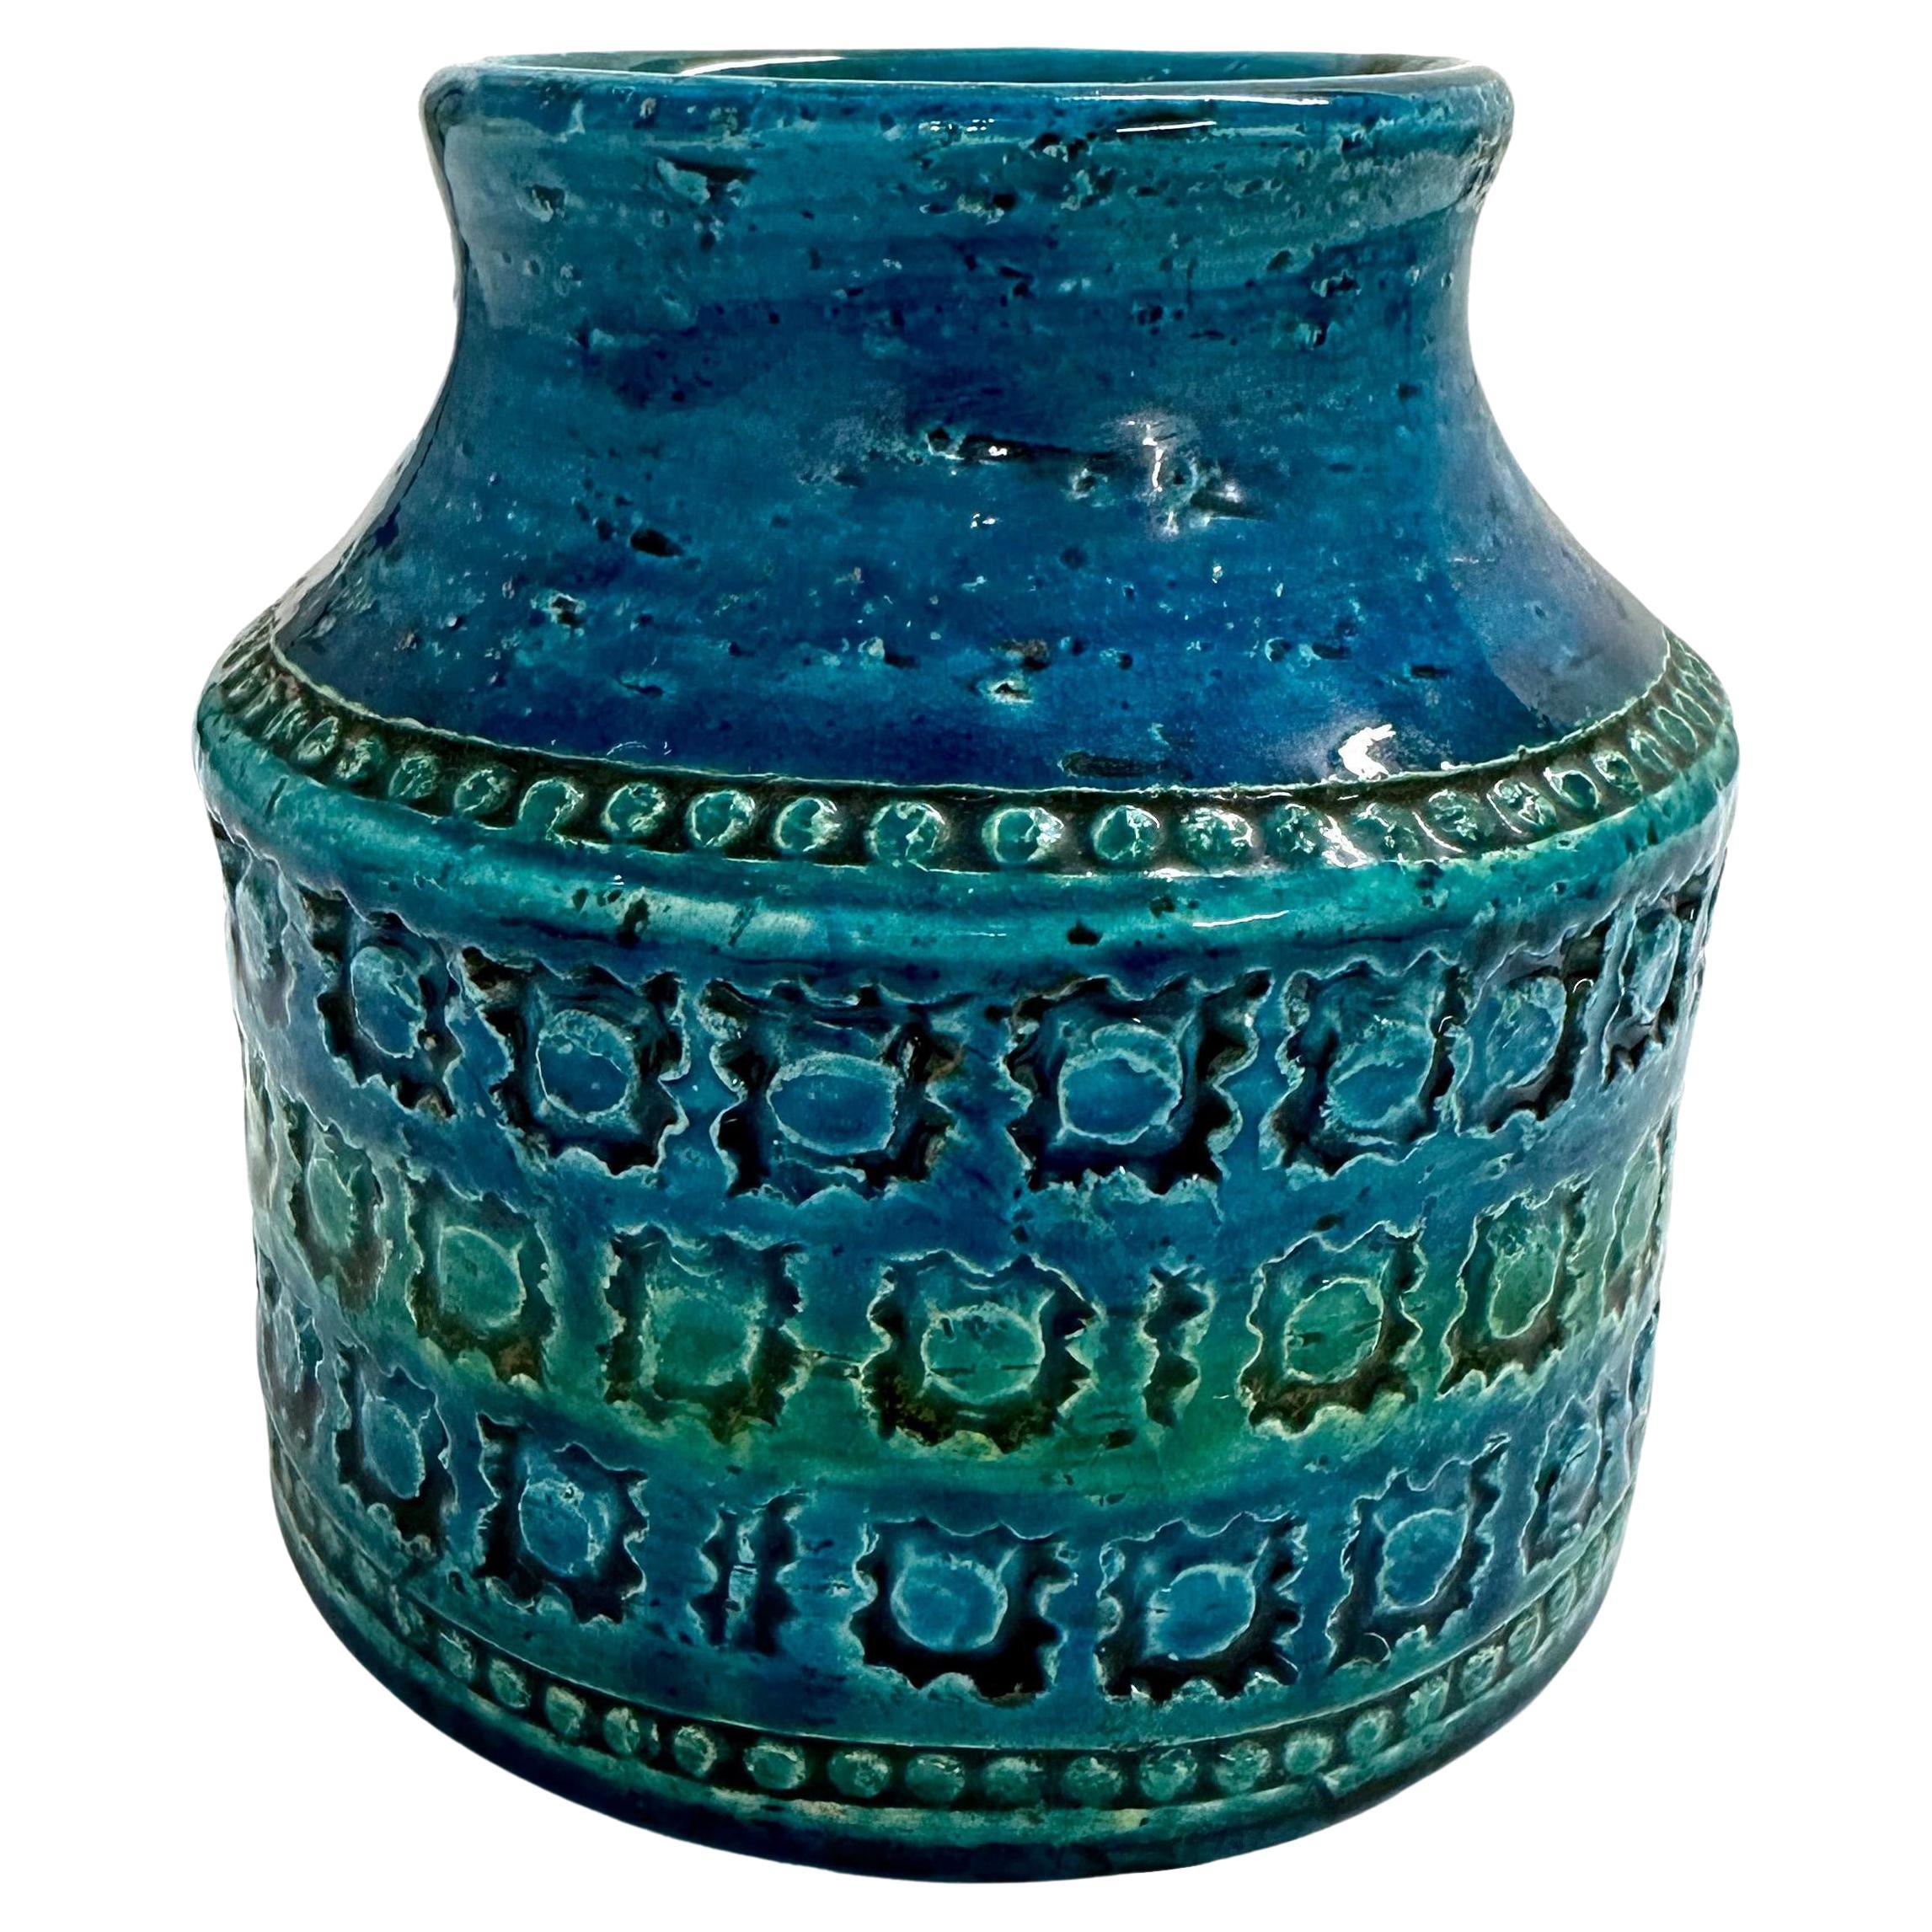 Aldo Londi for Bitossi Rimini Blu Wide-Mouthed Vase